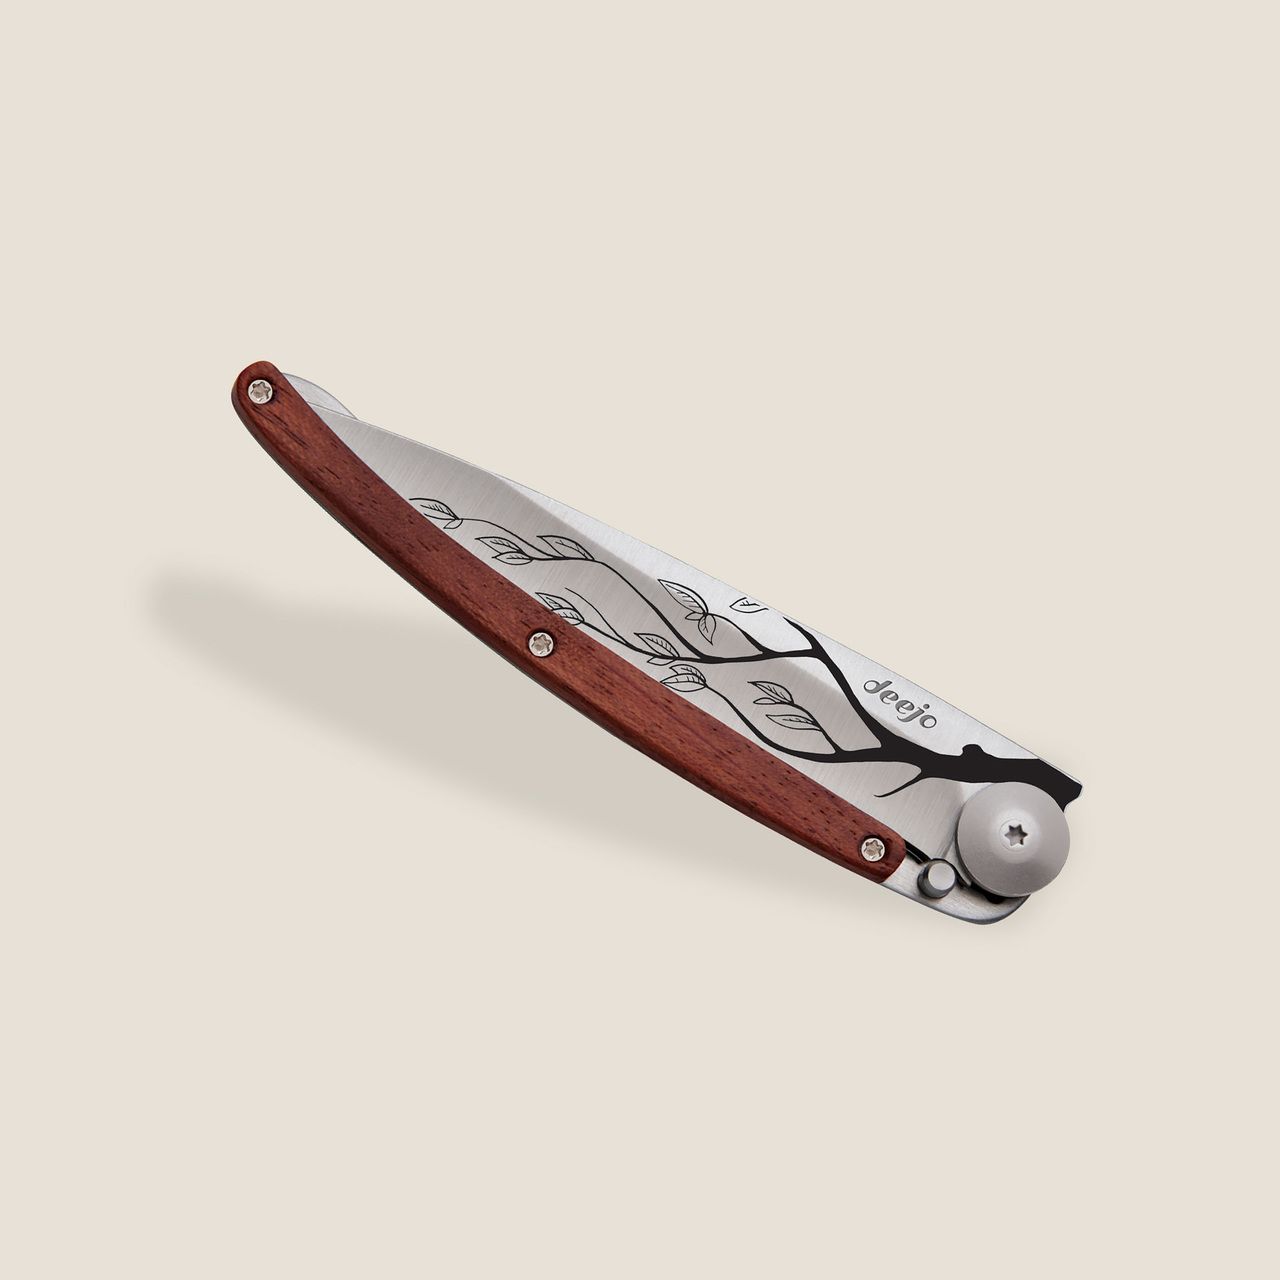 Deejo 37G Coral Wood / Tree Pocket Knife